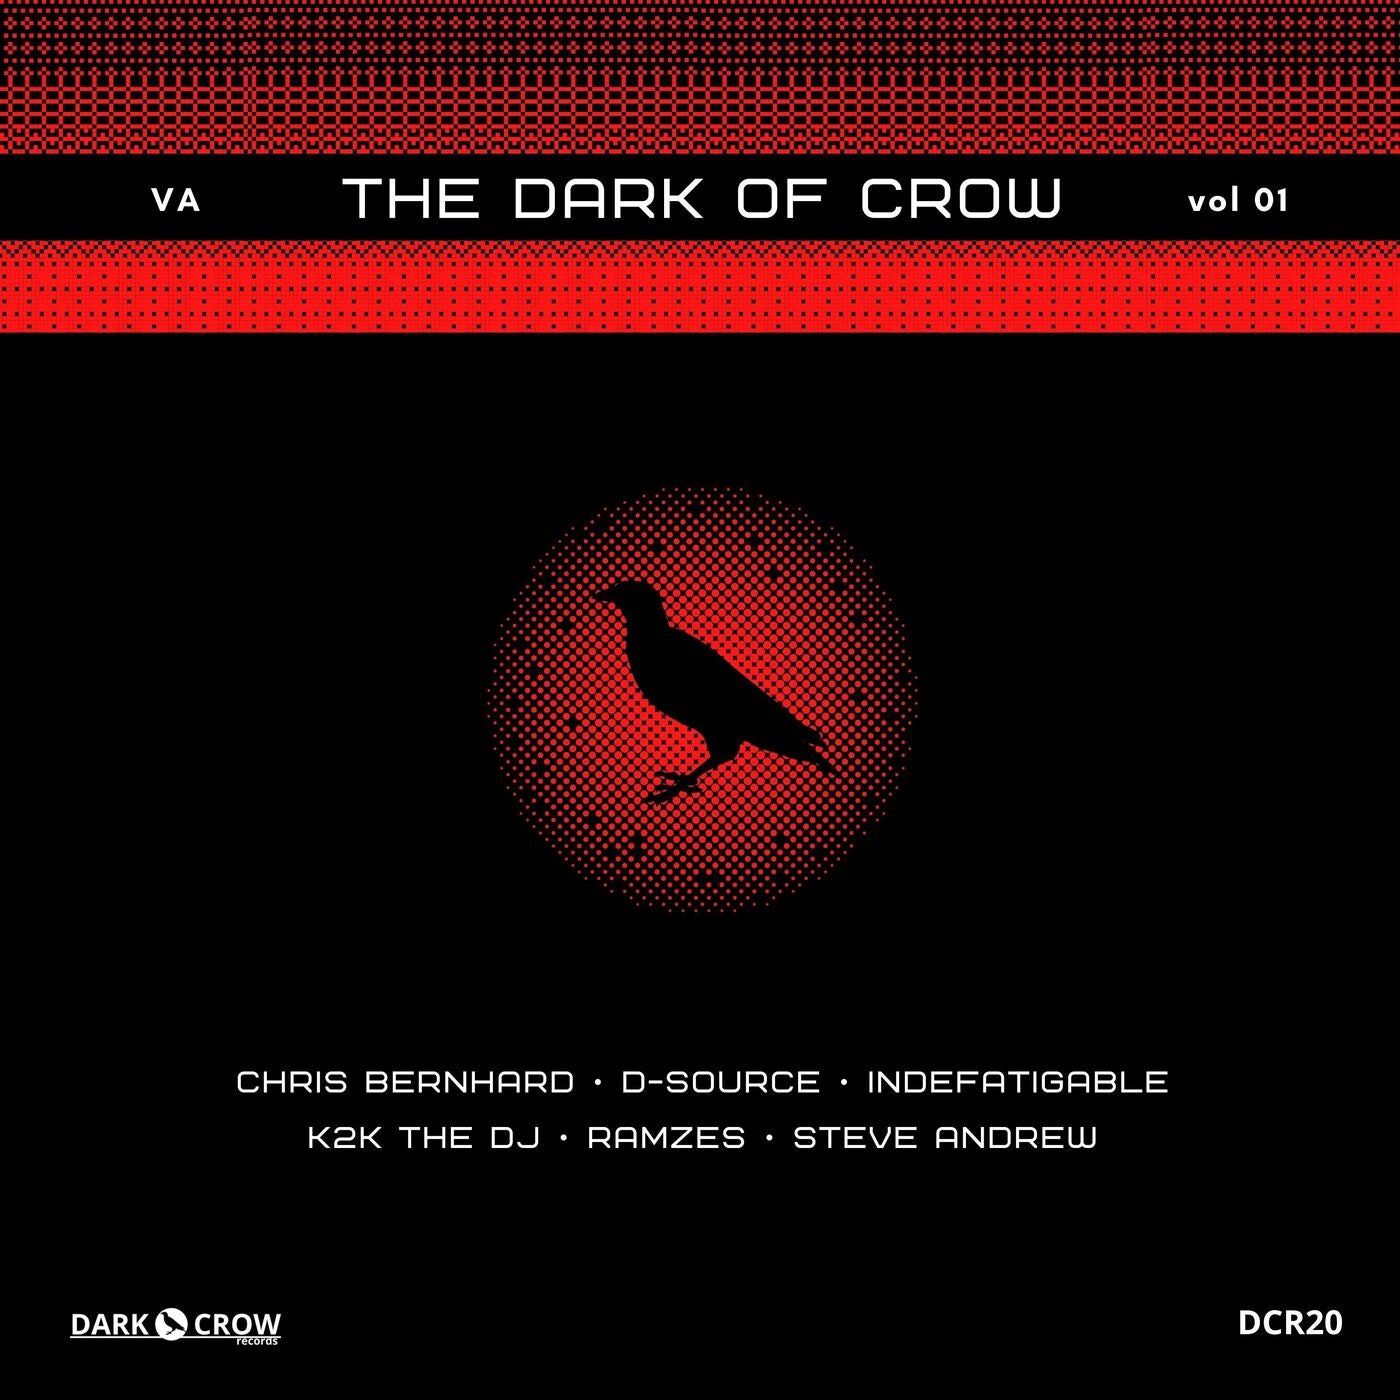 The Dark Of Crow